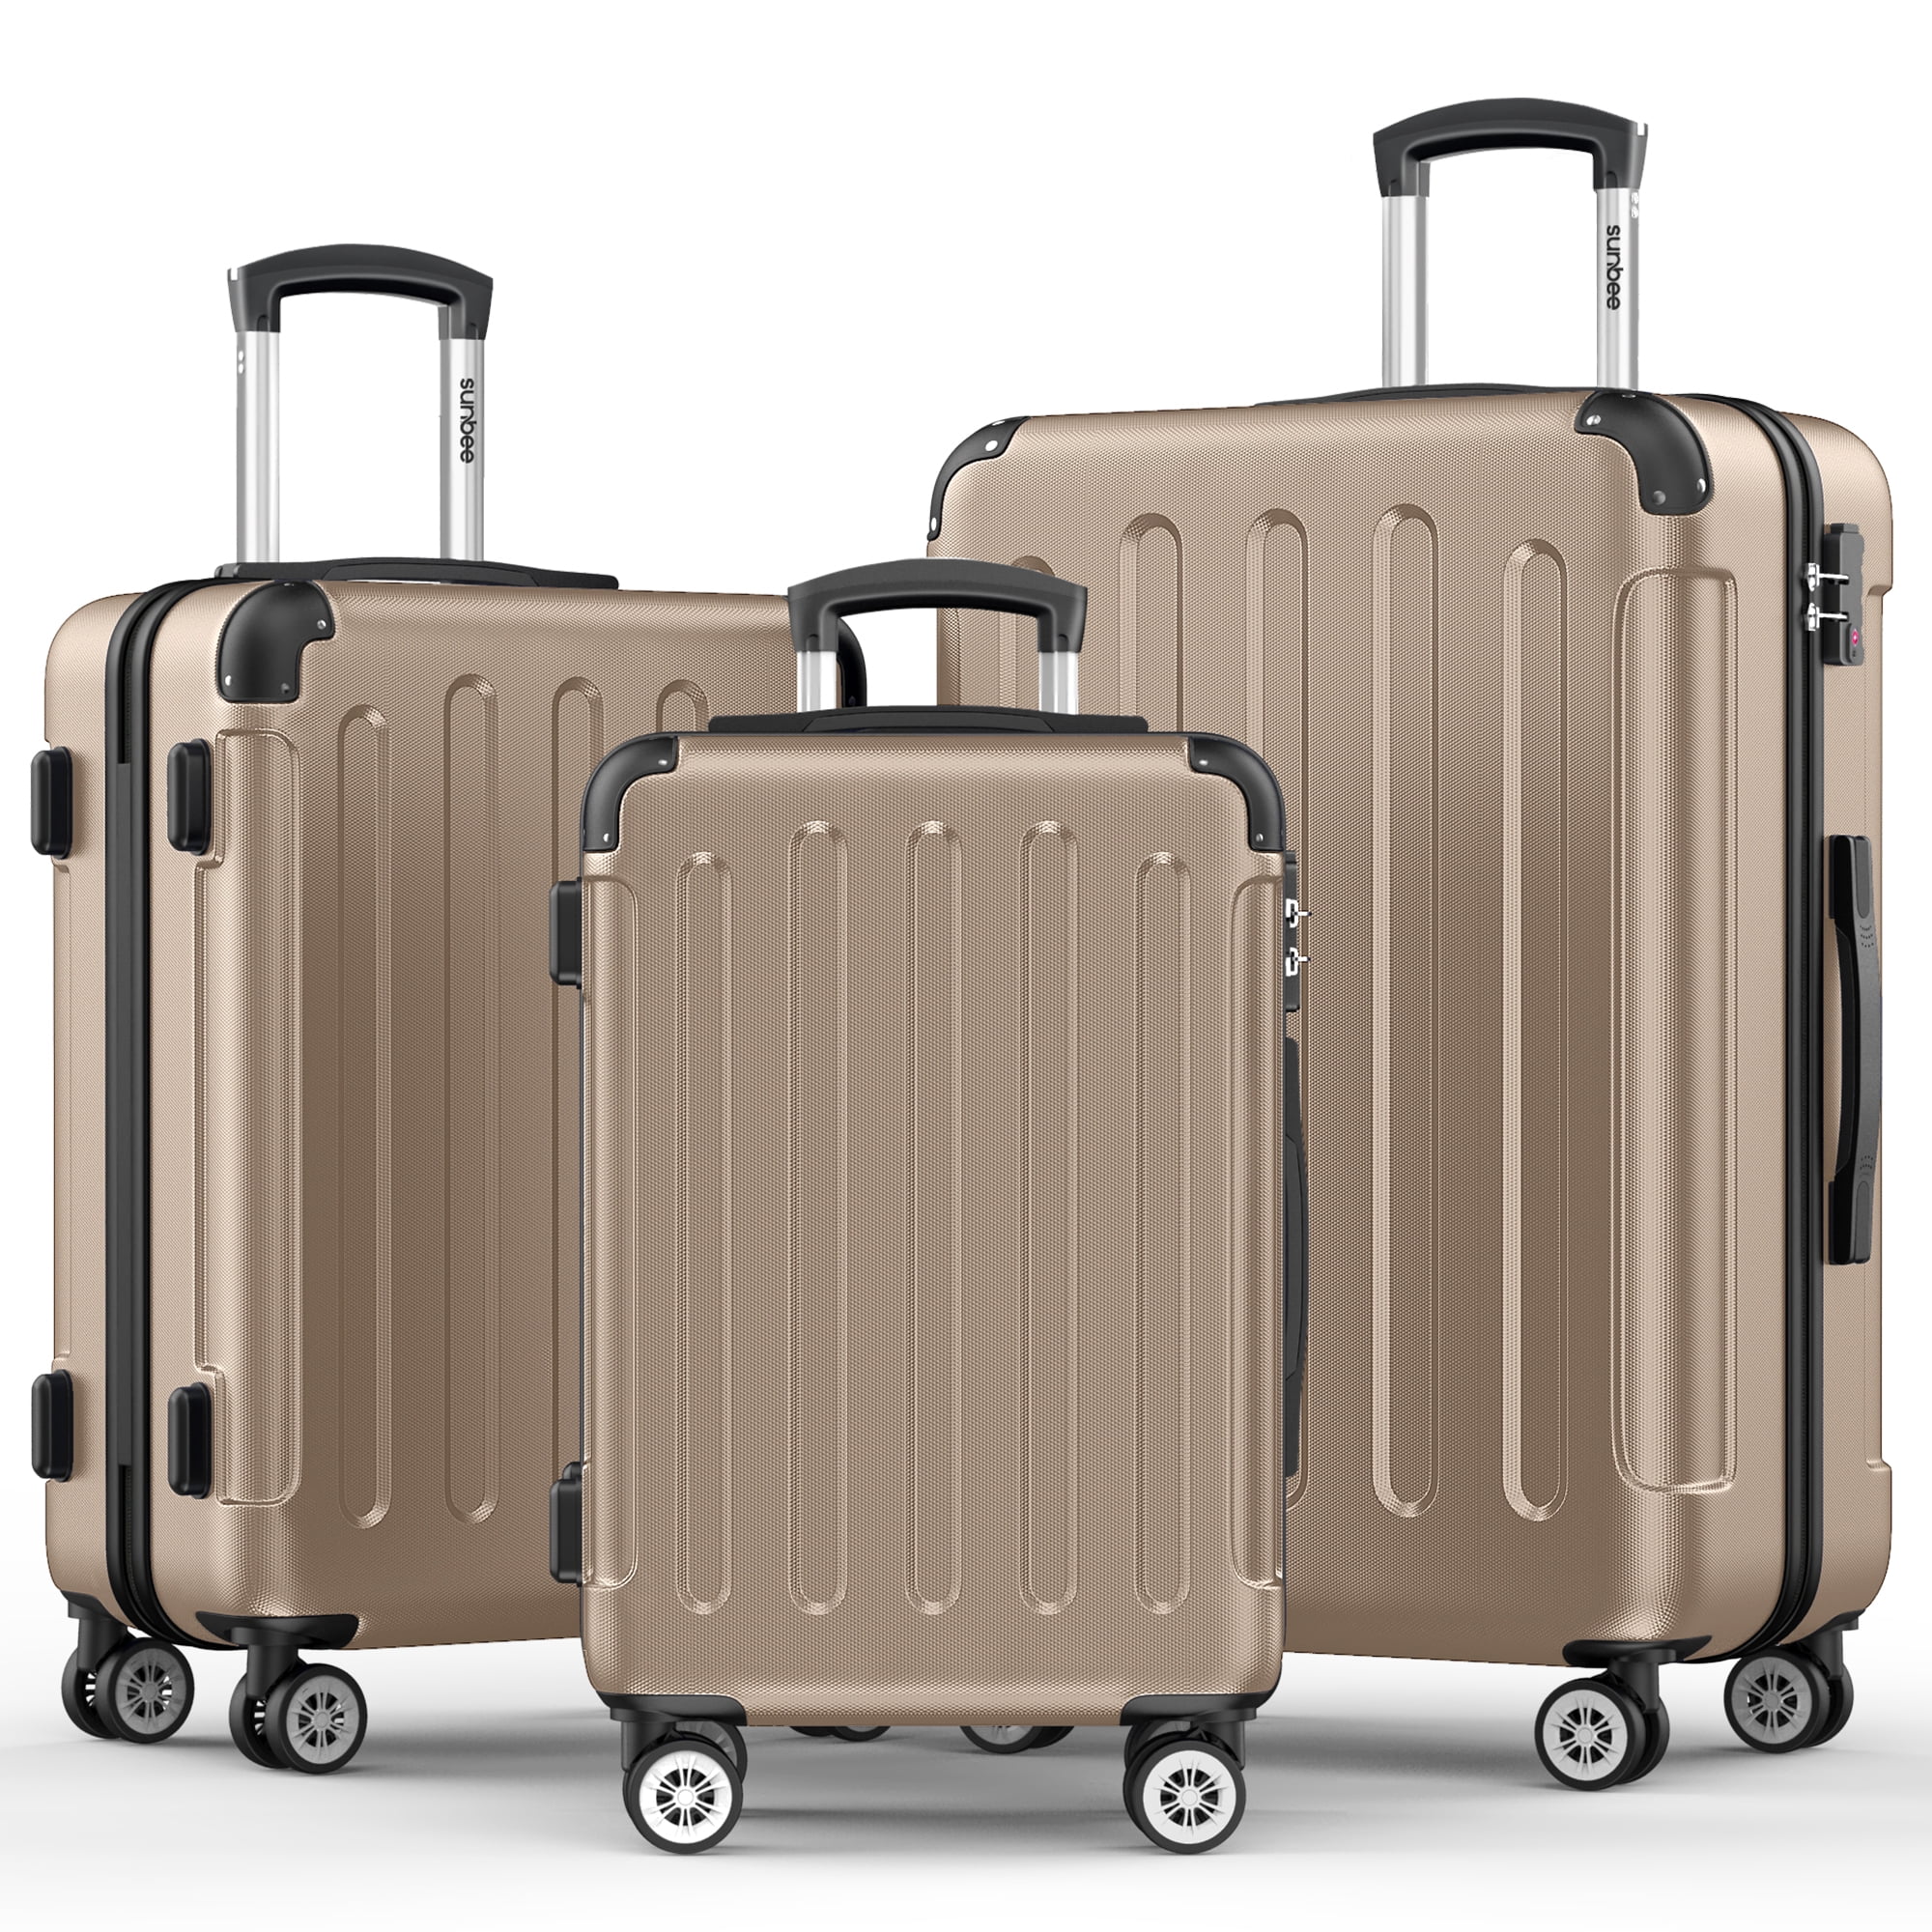 Sunbee 3 Piece Luggage Sets Hardshell Lightweight Suitcase with